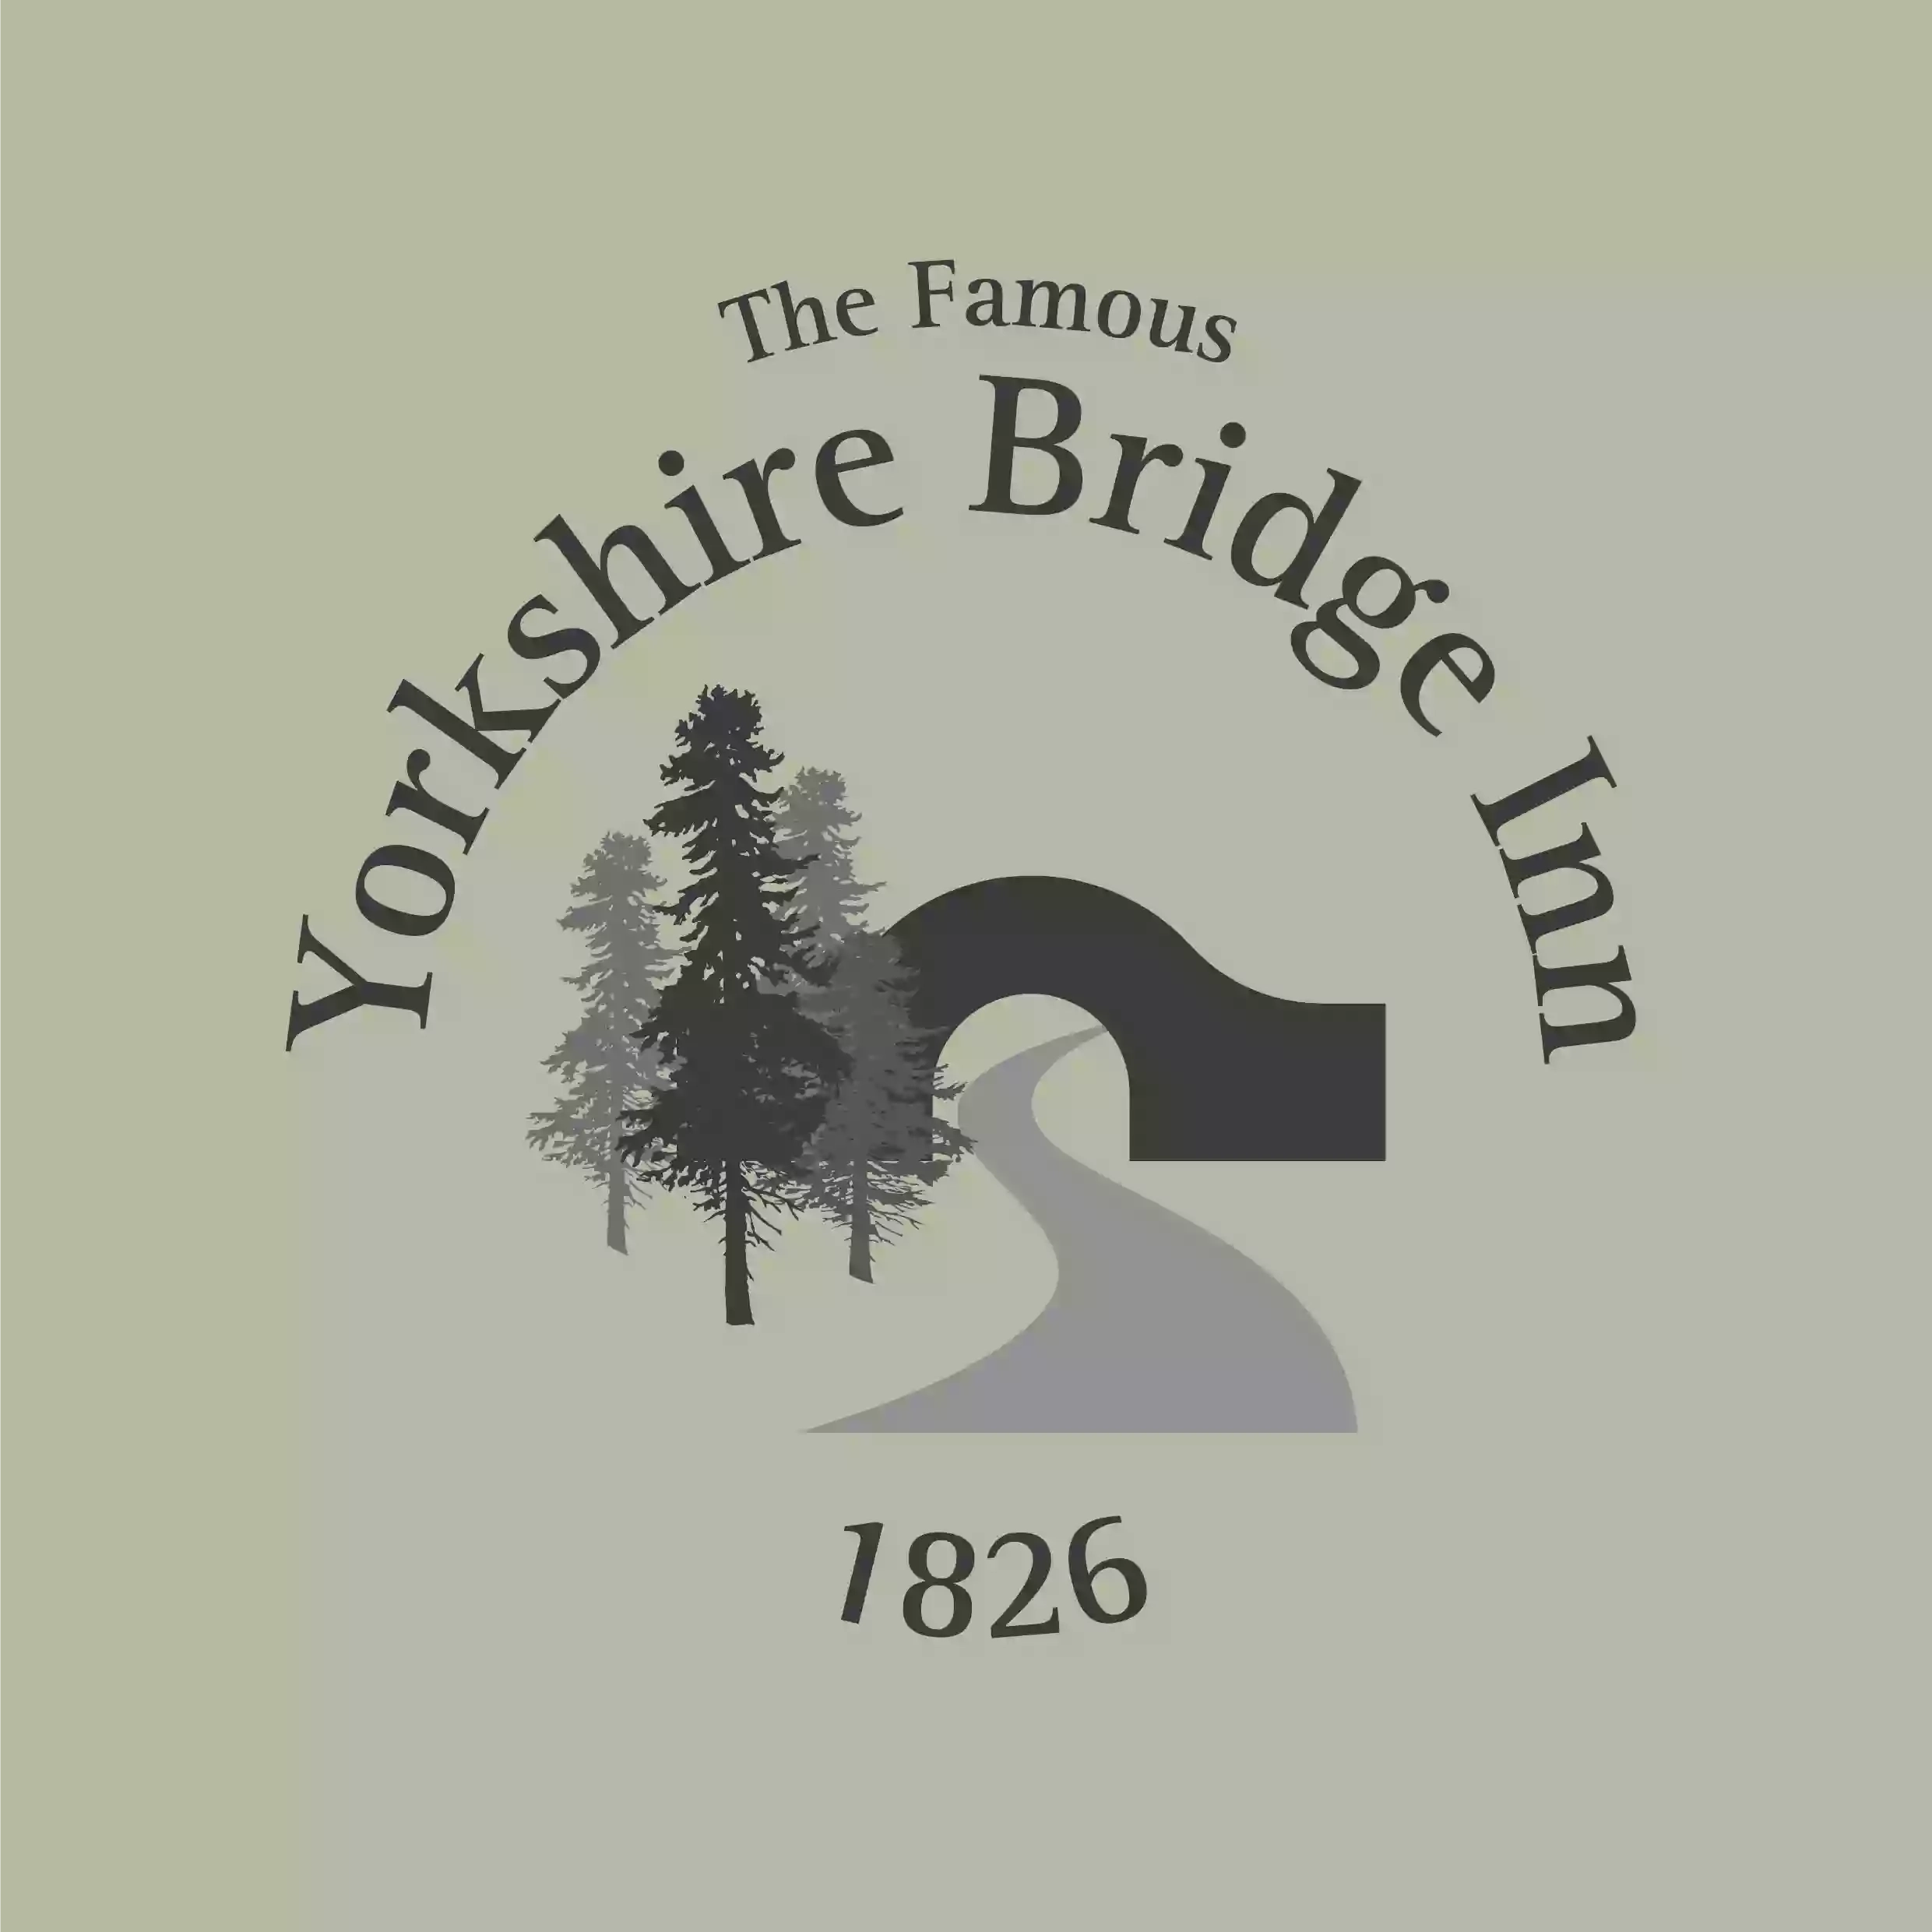 Yorkshire Bridge Inn